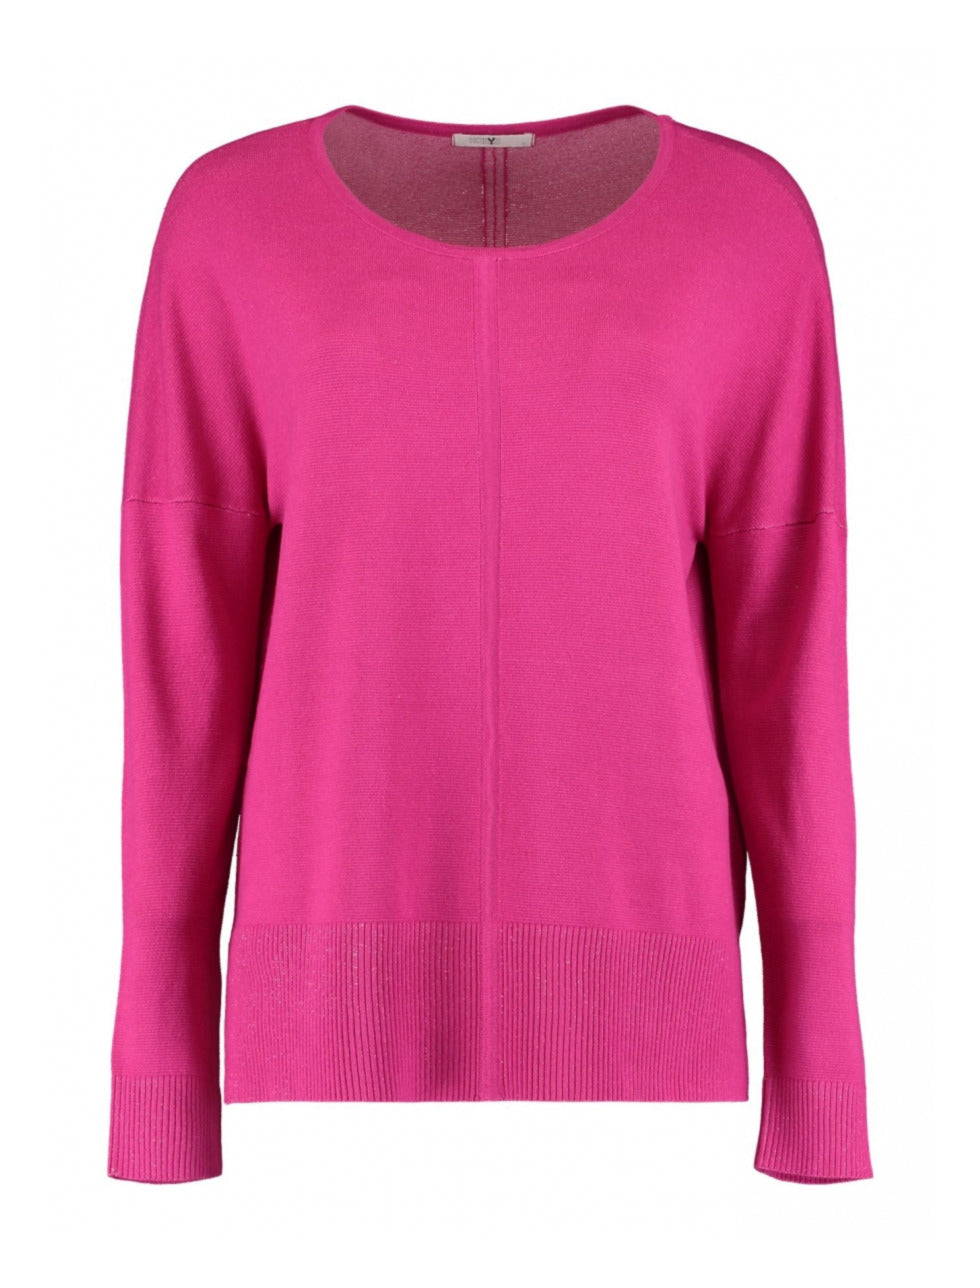 Yamila Pink Berry Fine Knit Top